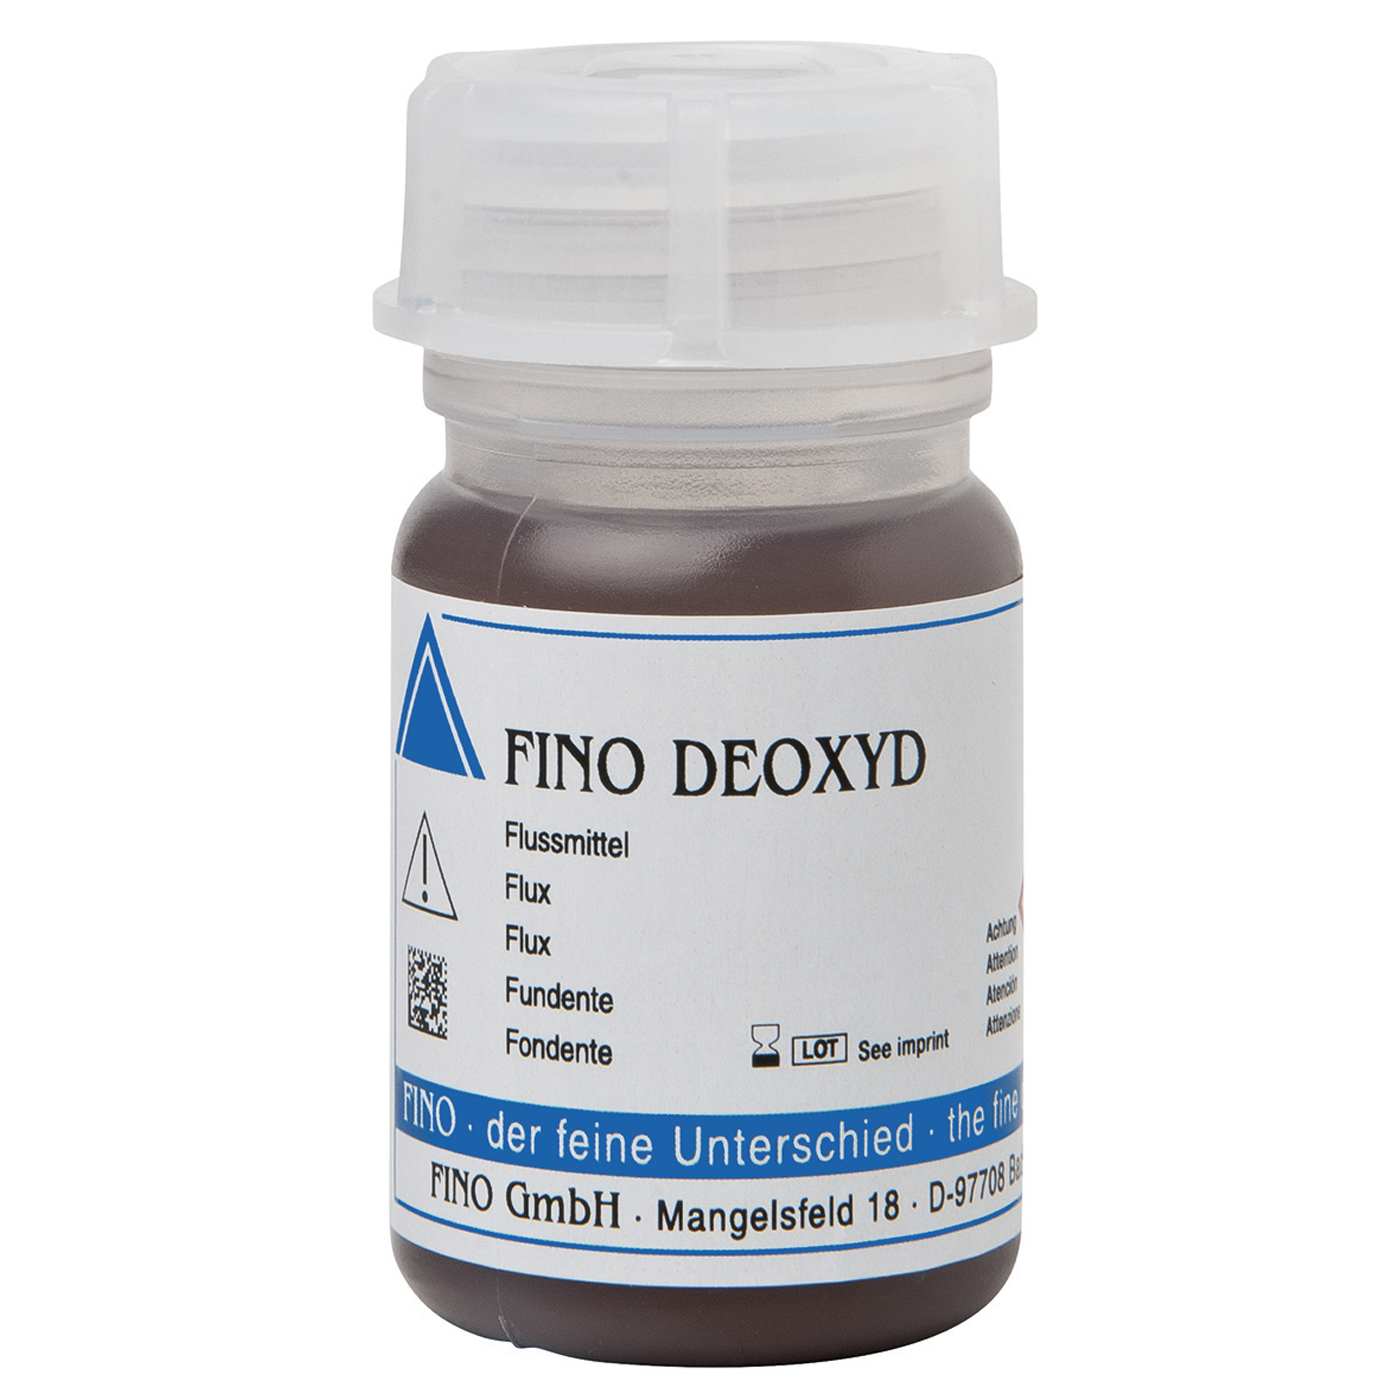 FINO DEOXYD Flussmittel - 80 g